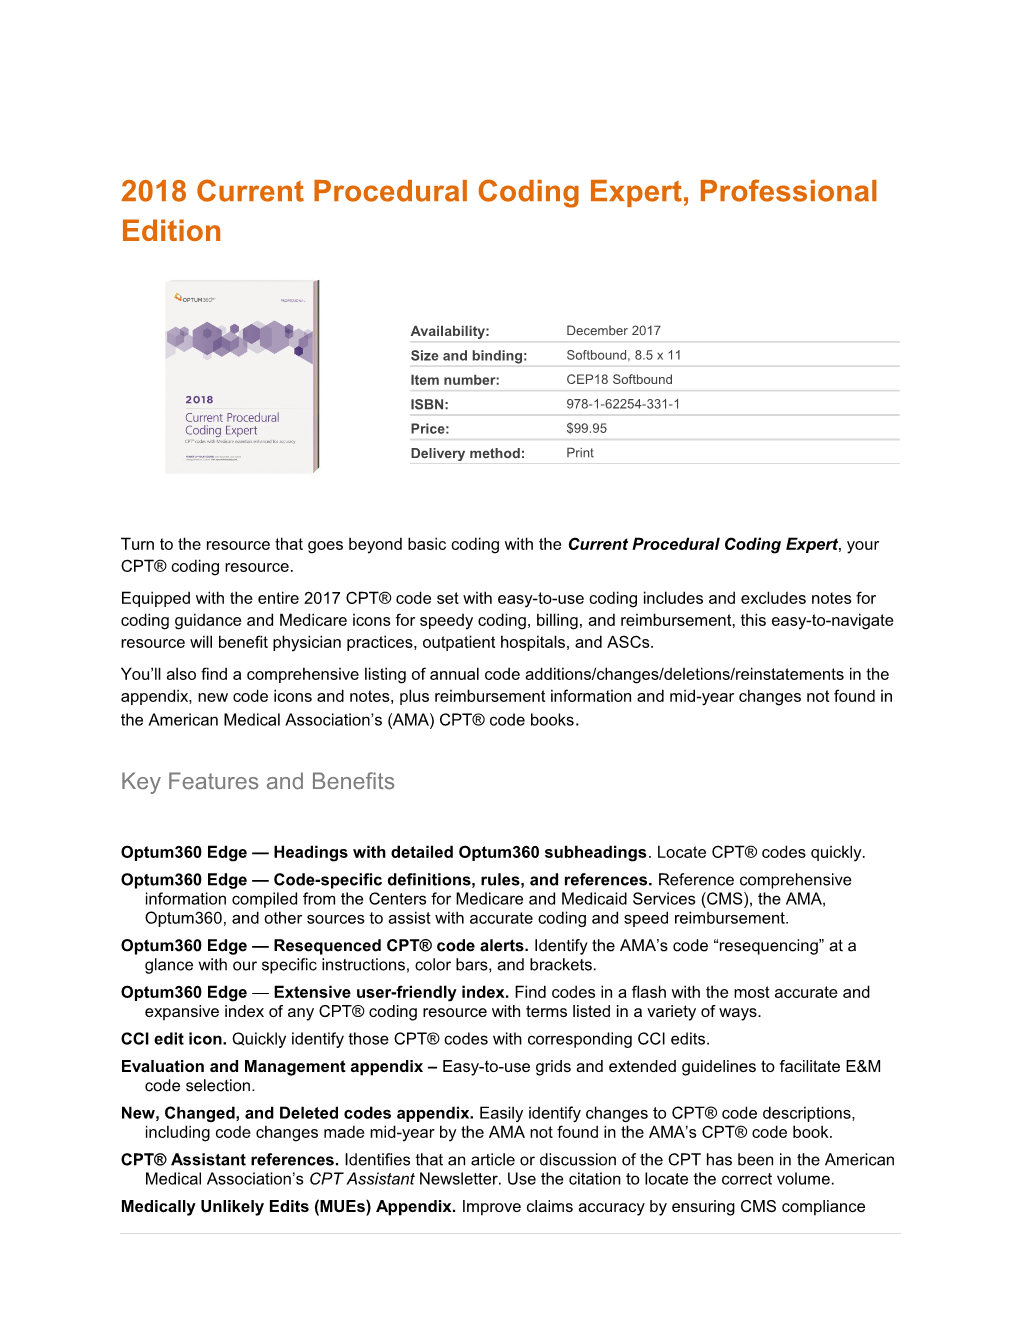 2018 Current Procedural Coding Expert,Professional Edition